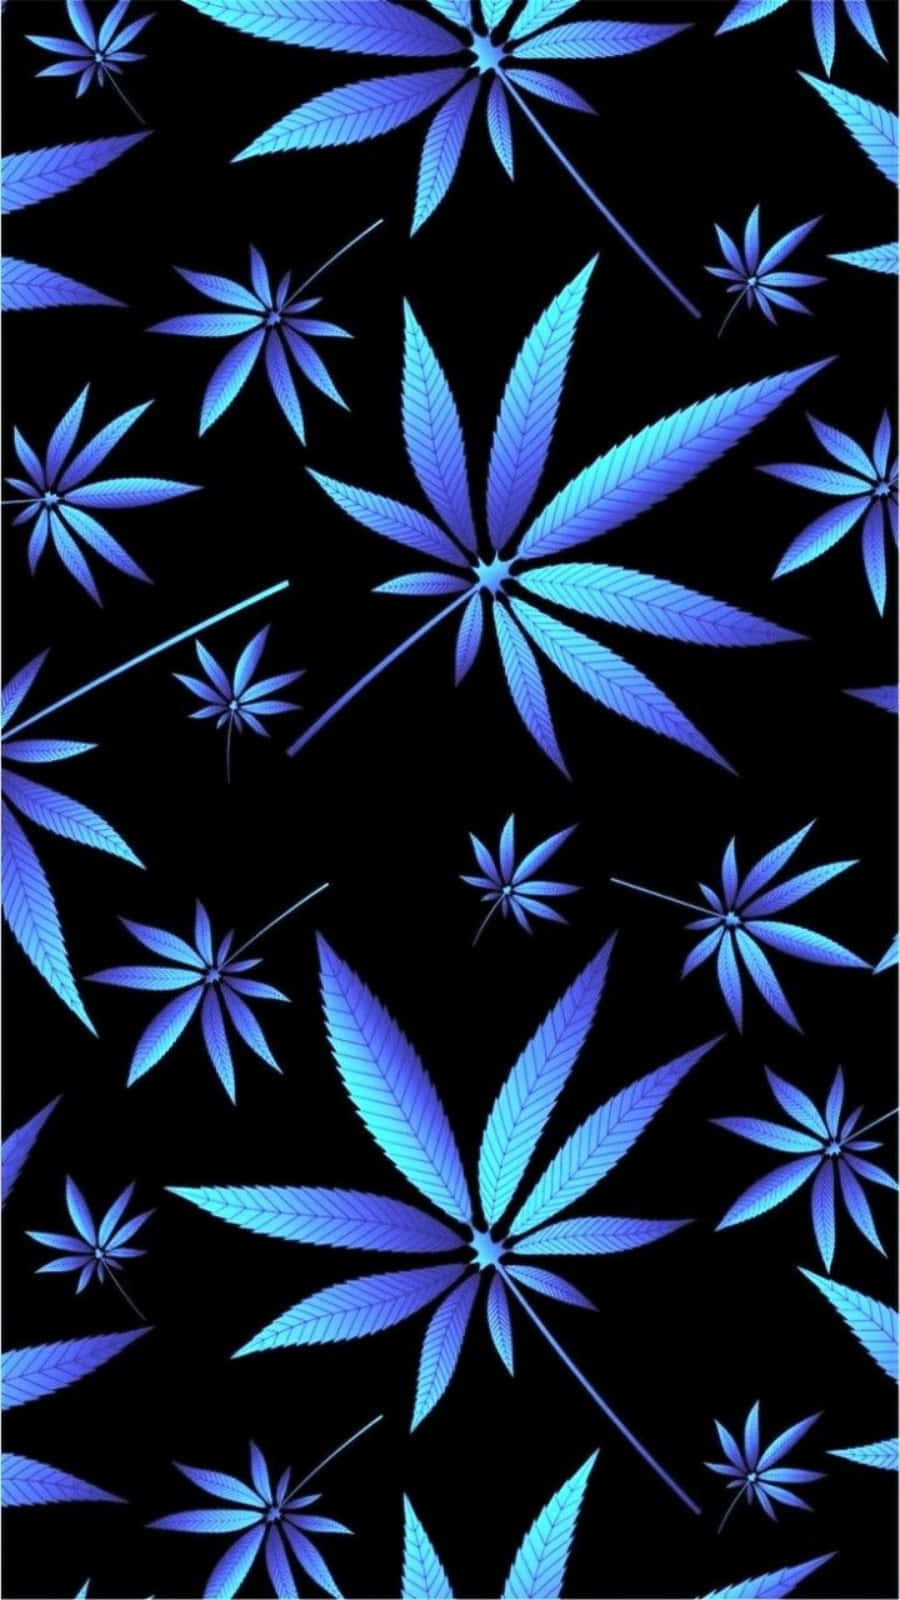 Dieperfekte Cannabis-mischung: Scheiße, Cool & Gras. Wallpaper